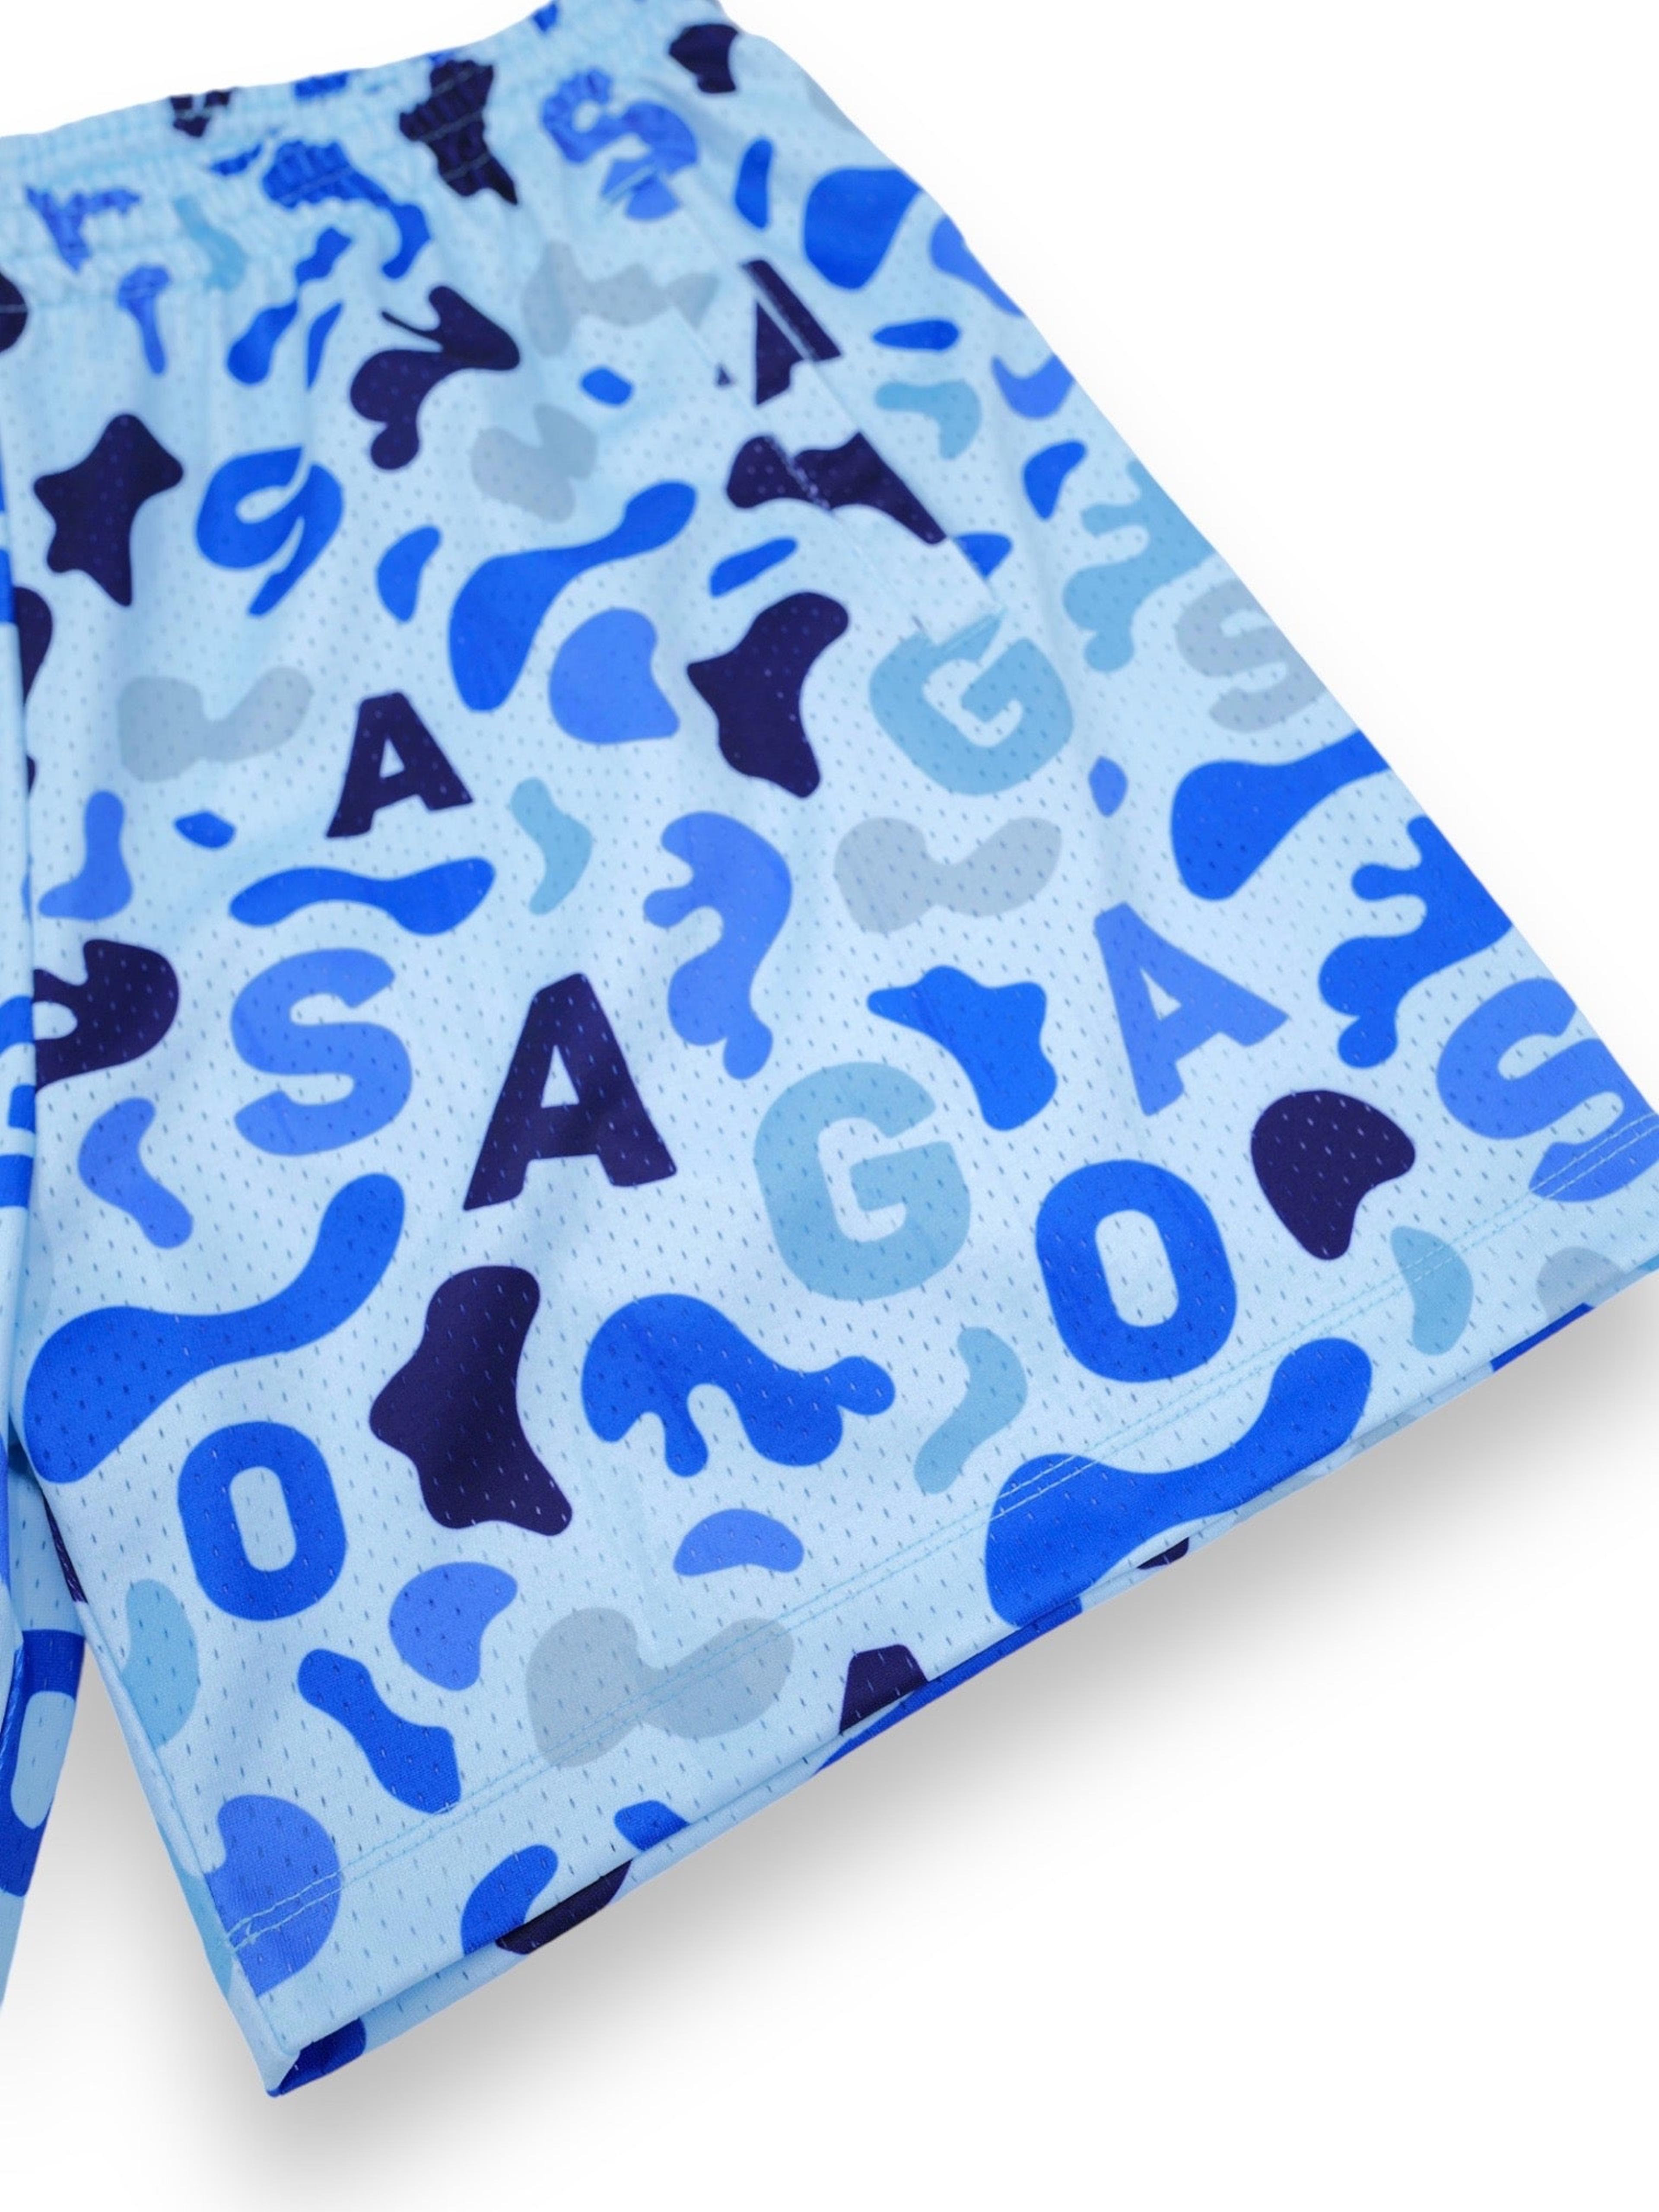 Alternate View 4 of Sago camo shorts (Blue)X